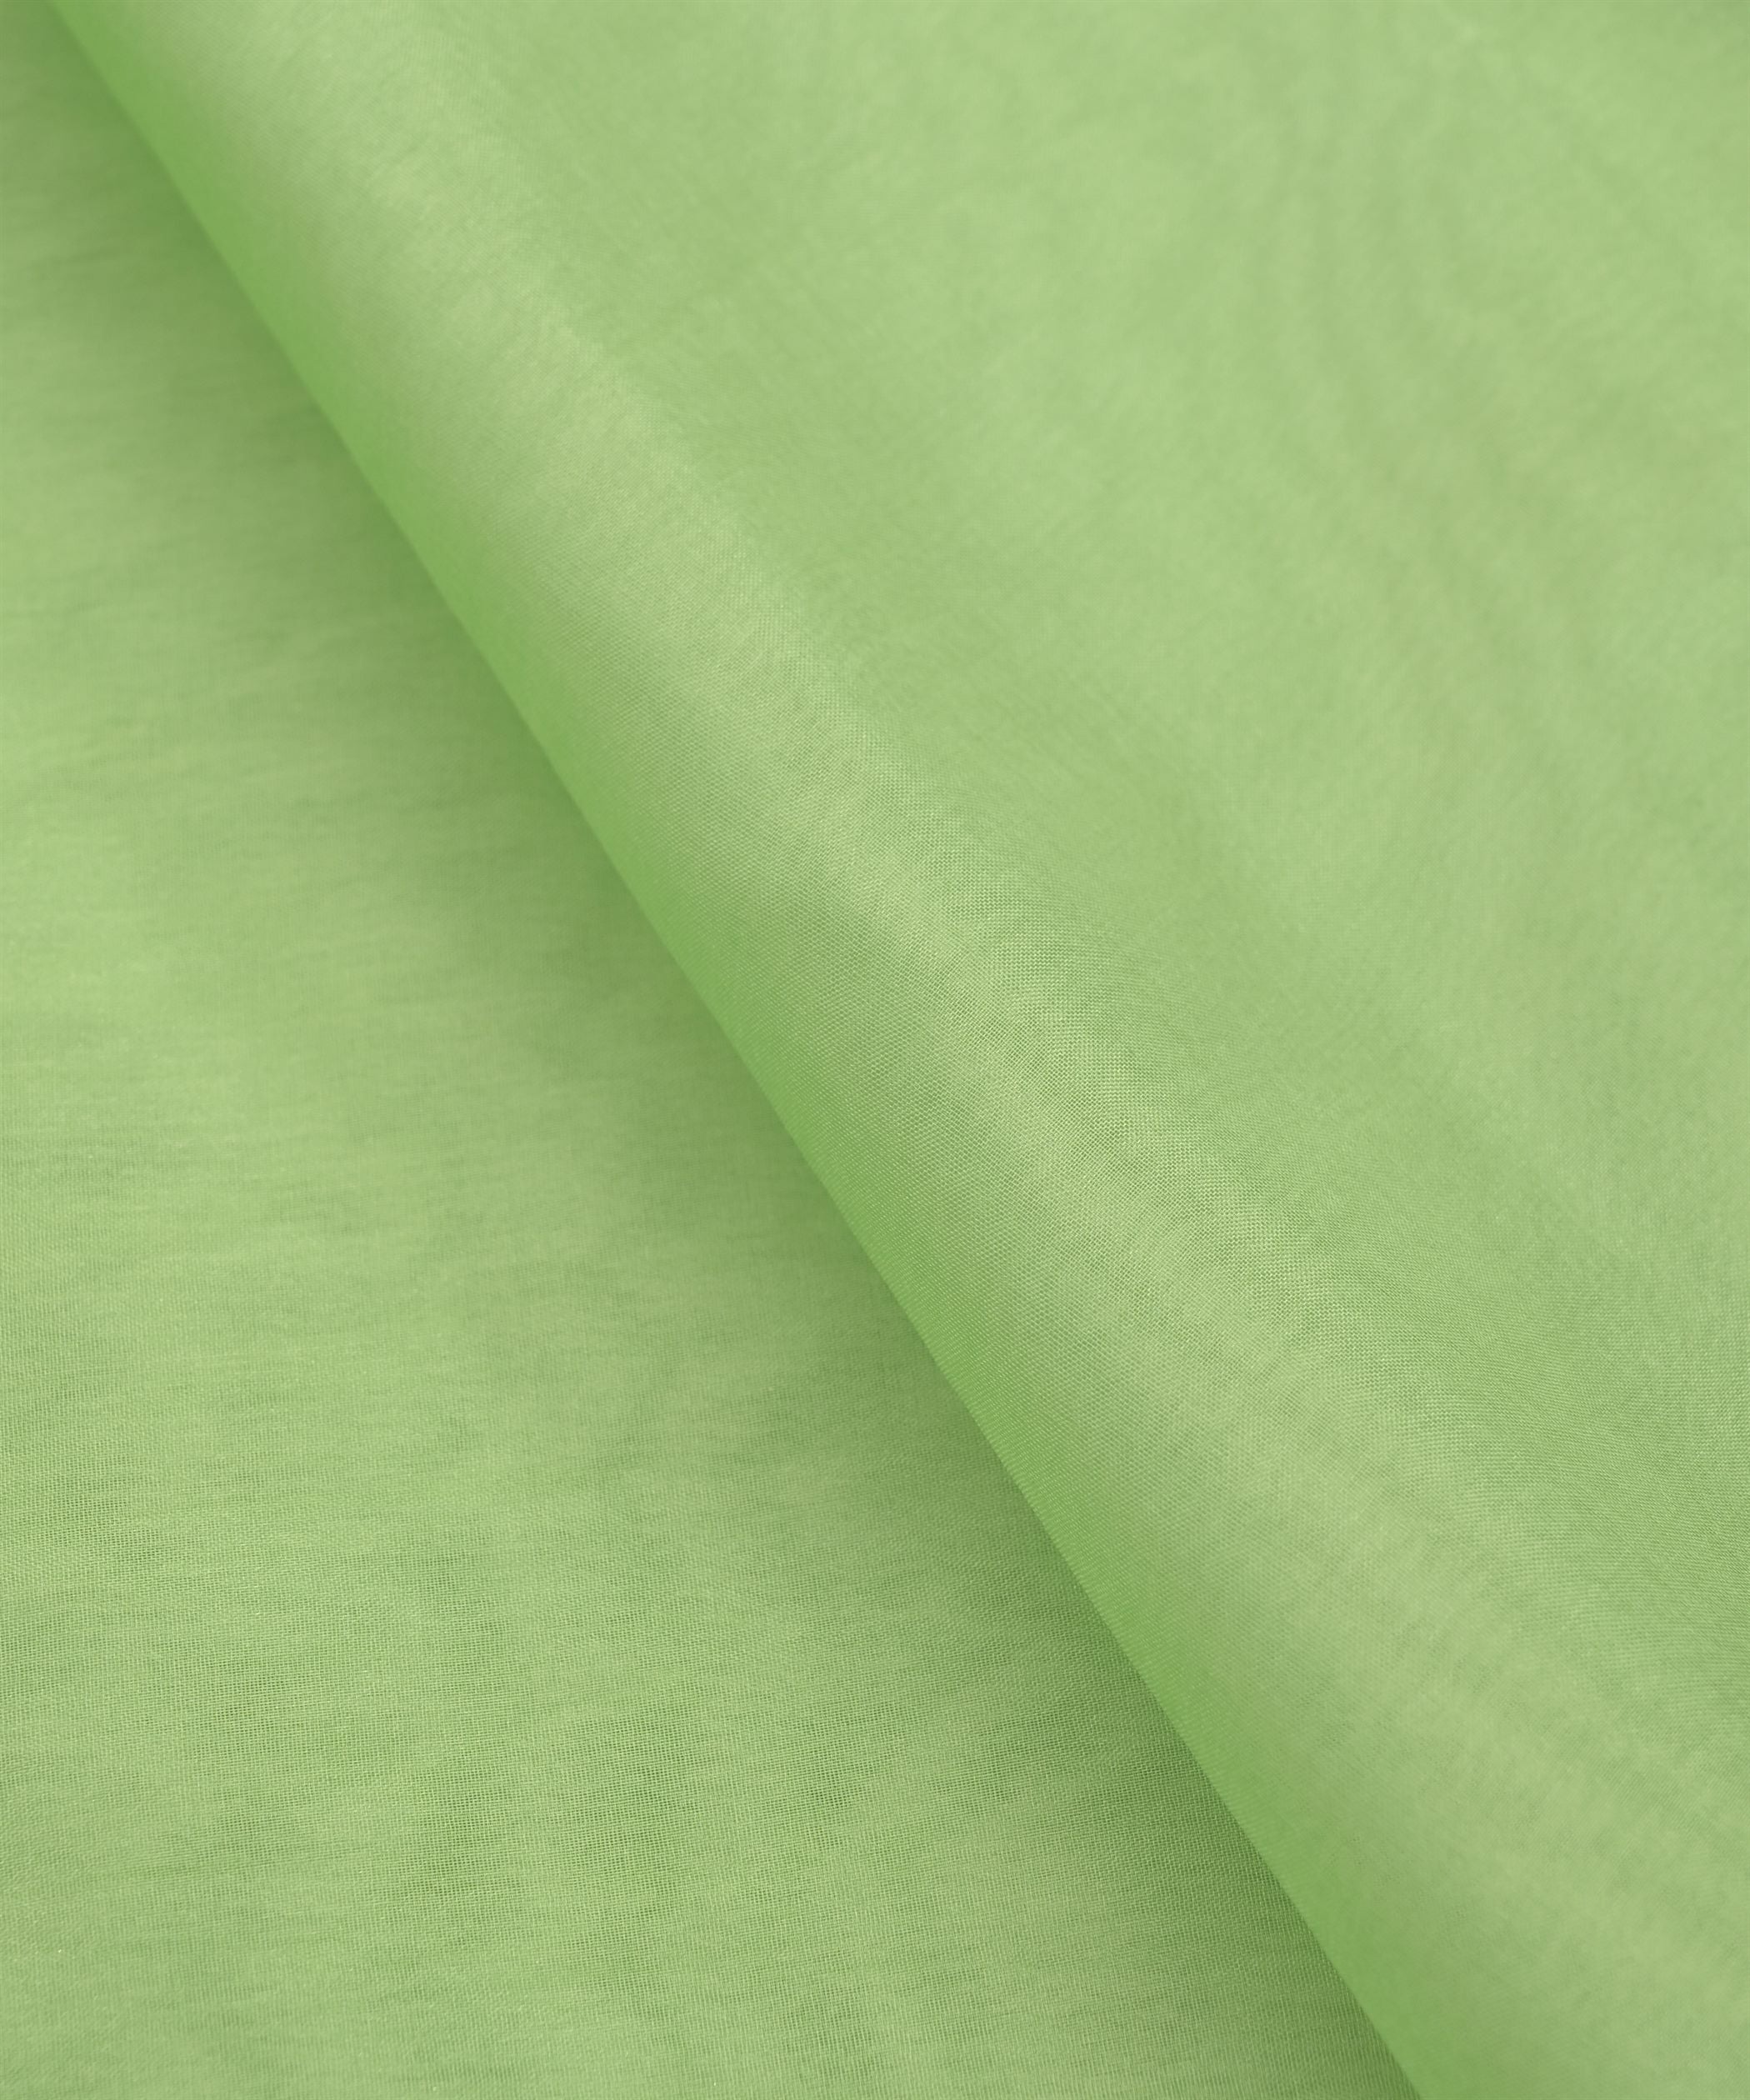 Mint Green Plain Dyed Organza Fabric